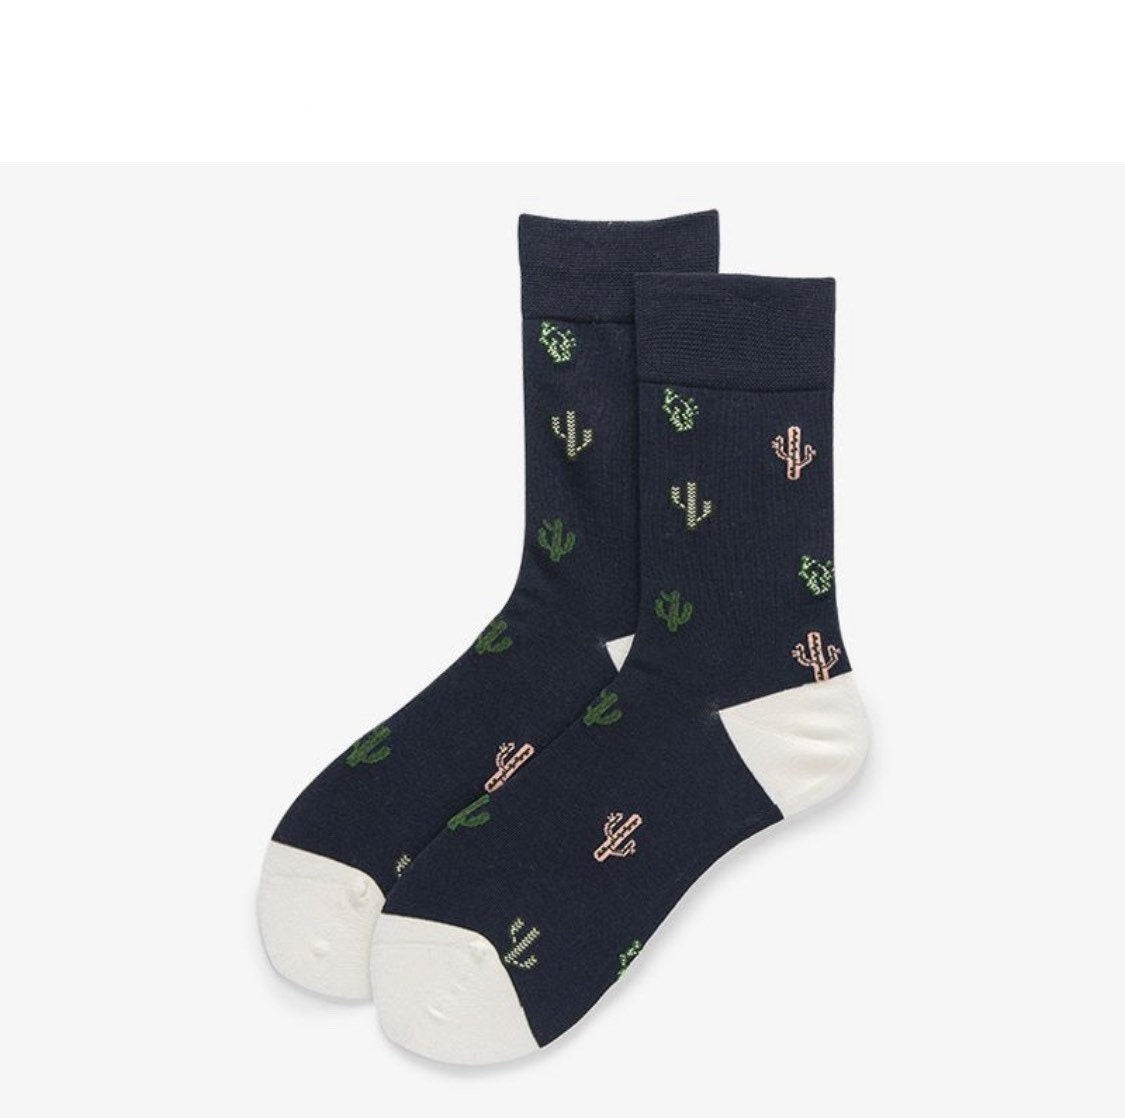 Miss June’s｜1 Pair cotton socks| Creative| Colorful | Cool | Patterned | Geometric socks| Unisex socks | Casual |